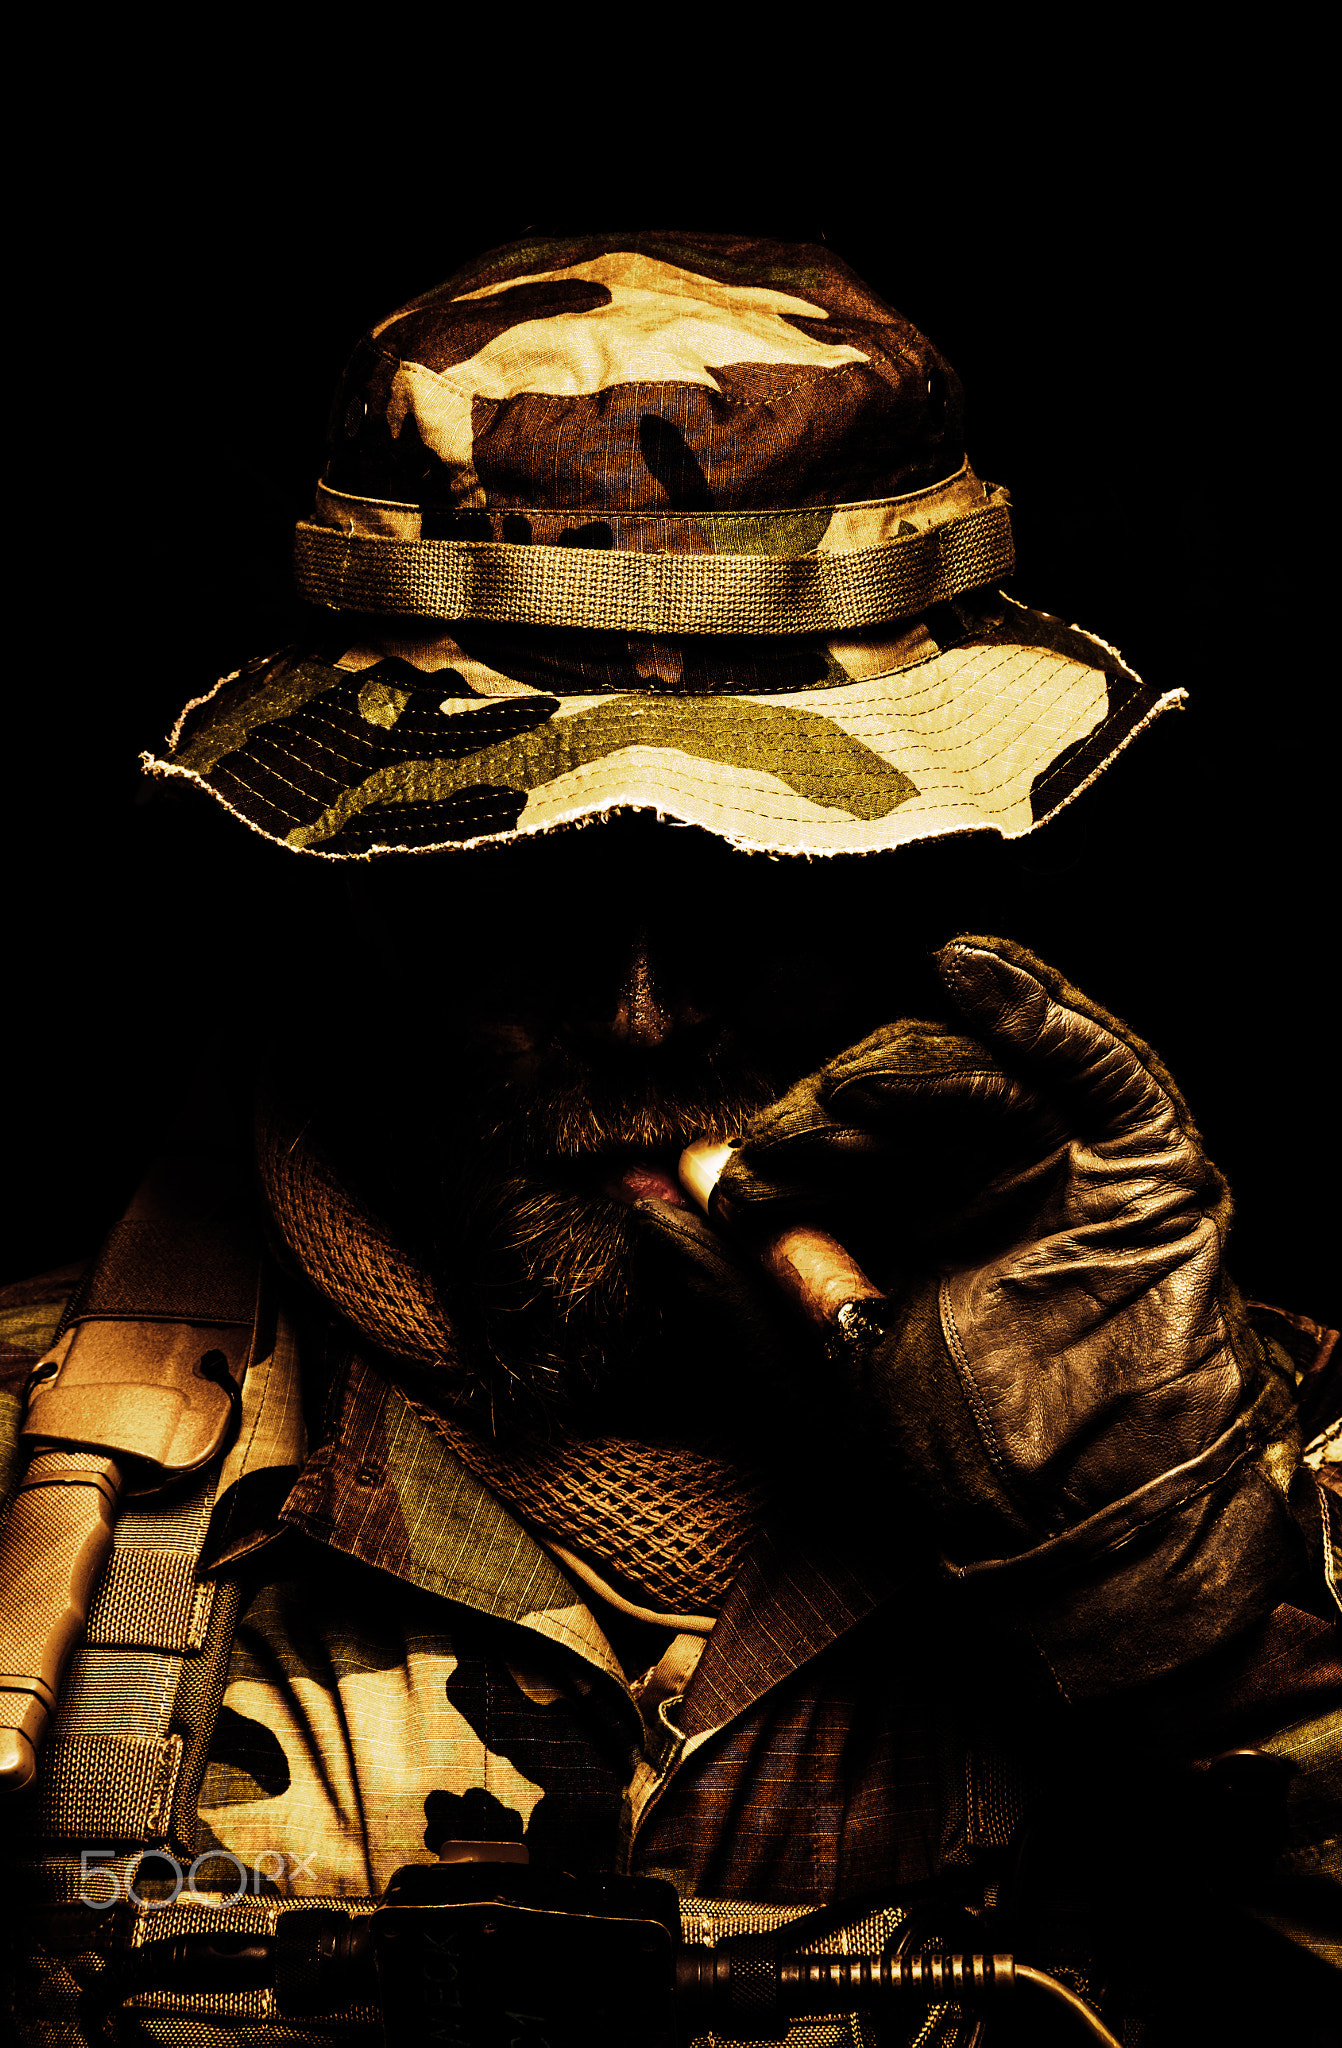 Commando soldier in boonie hat smoking cigar